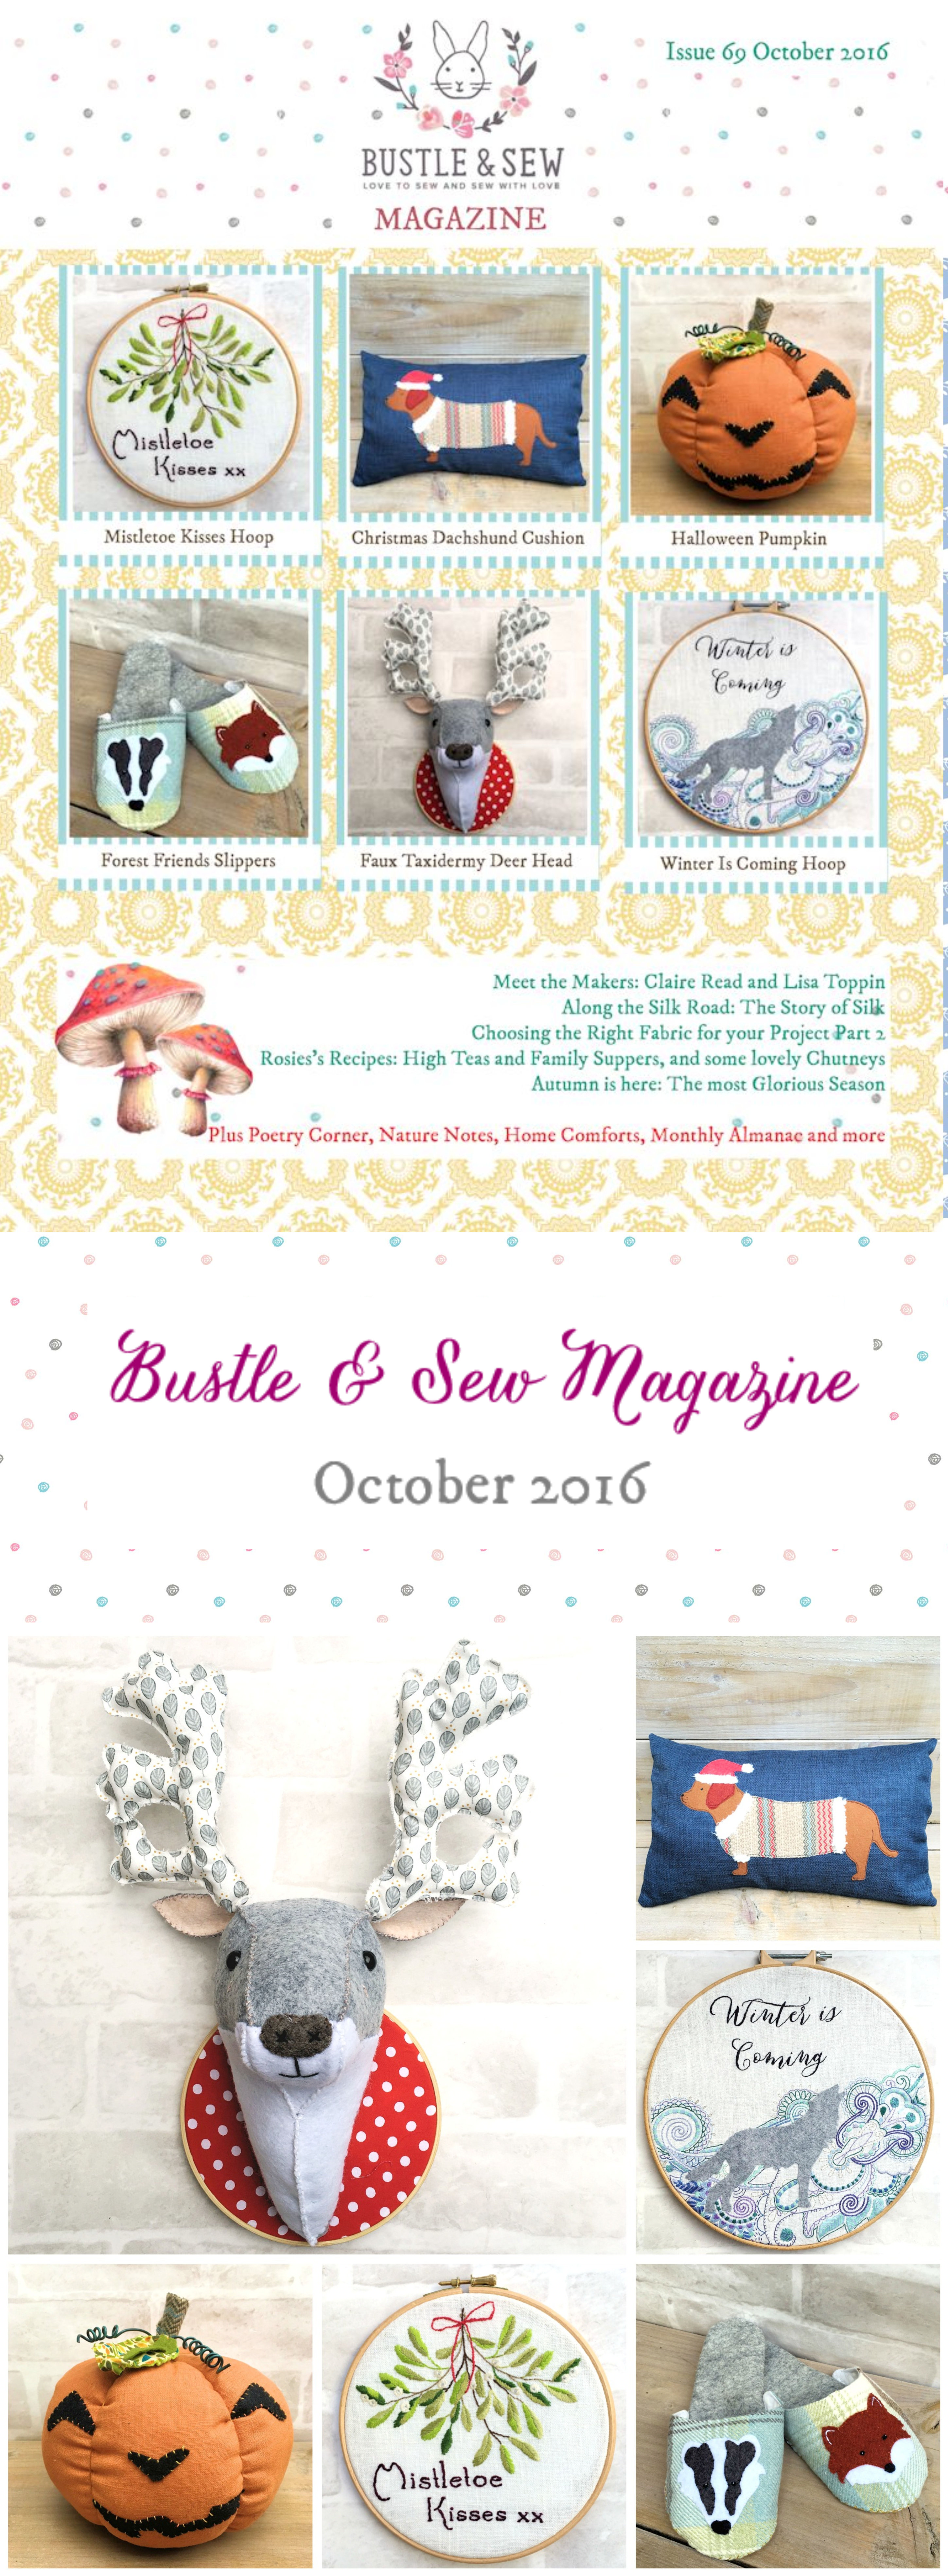 Bustle & Sew Magazine: October 2016